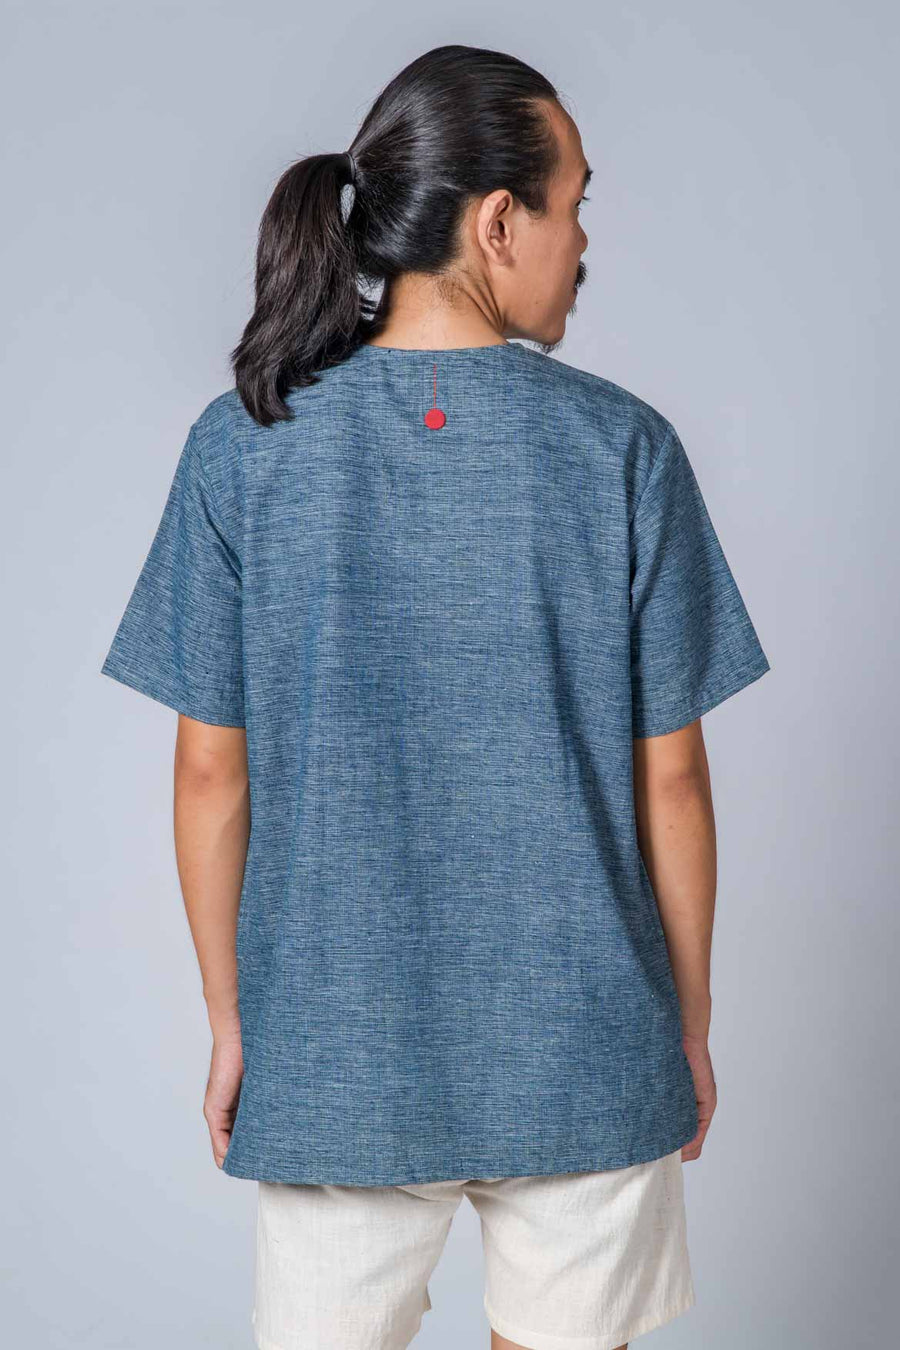 Indigo Handwoven Shirt - TYLER - Upasana Design Studio